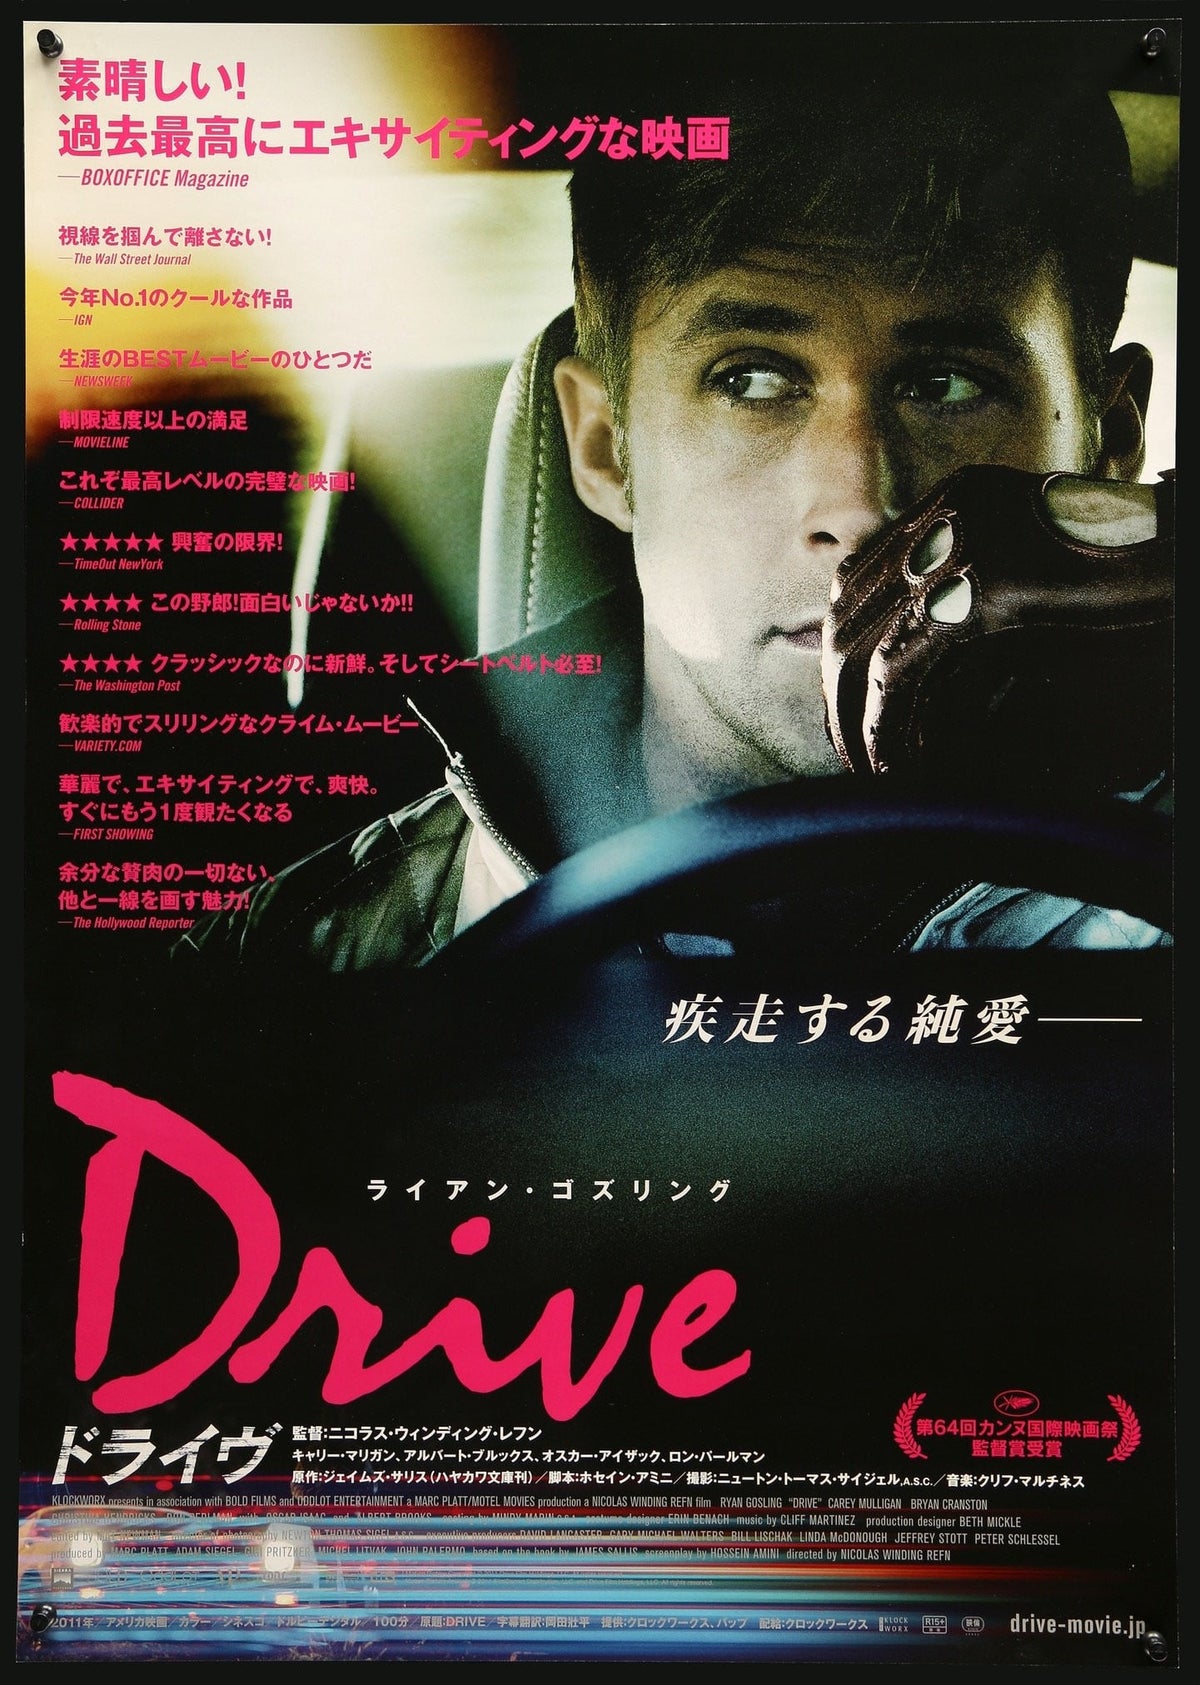 Drive (2011) original movie poster for sale at Original Film Art